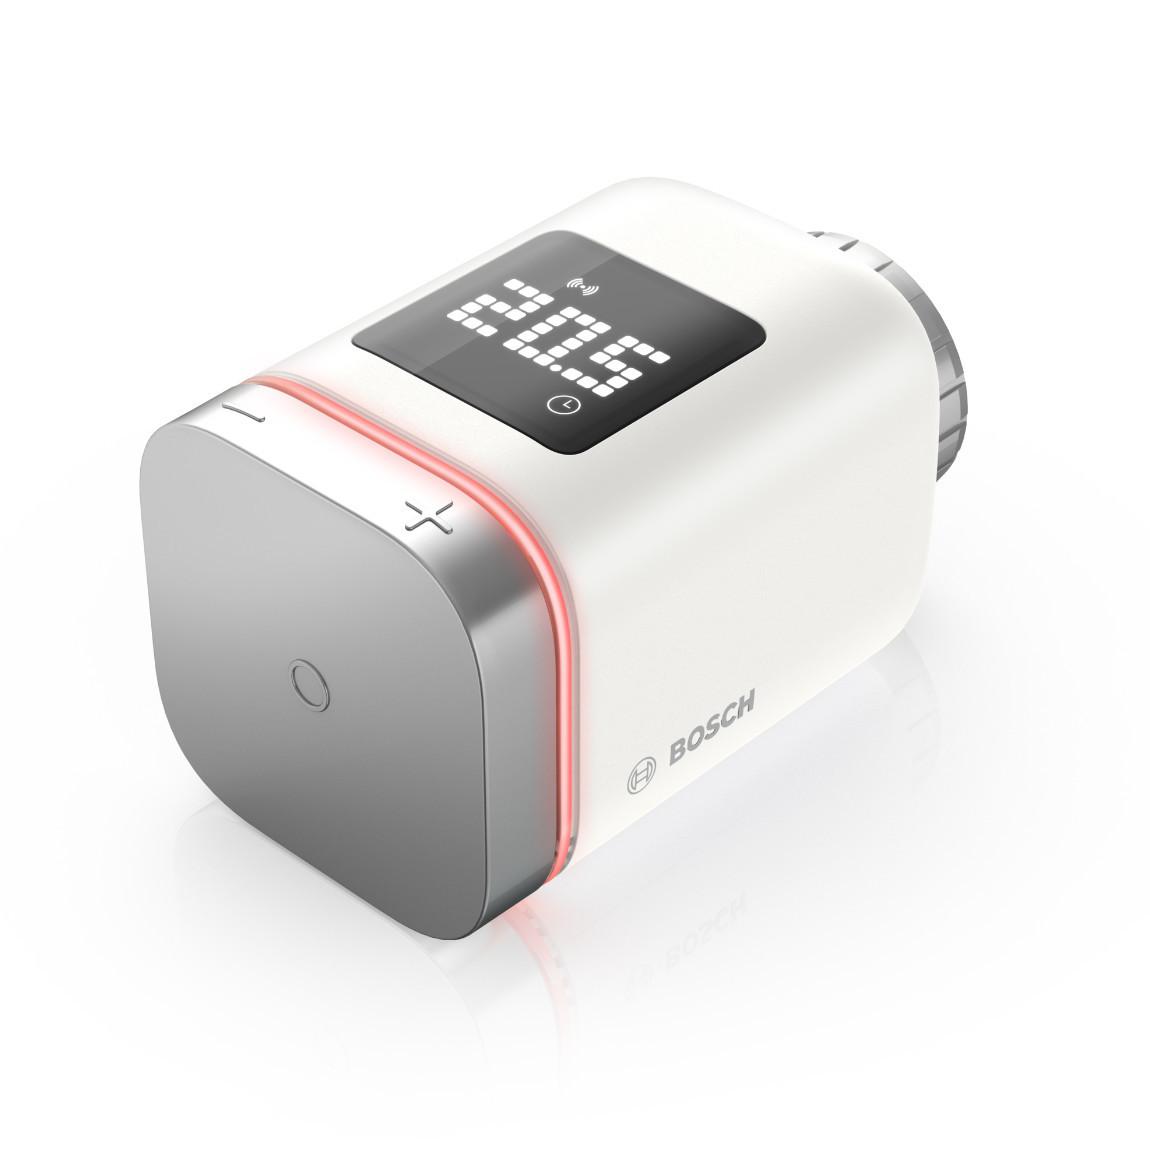 Bosch Smart Home Heizkörper-Thermostat II_schraeg rote LED